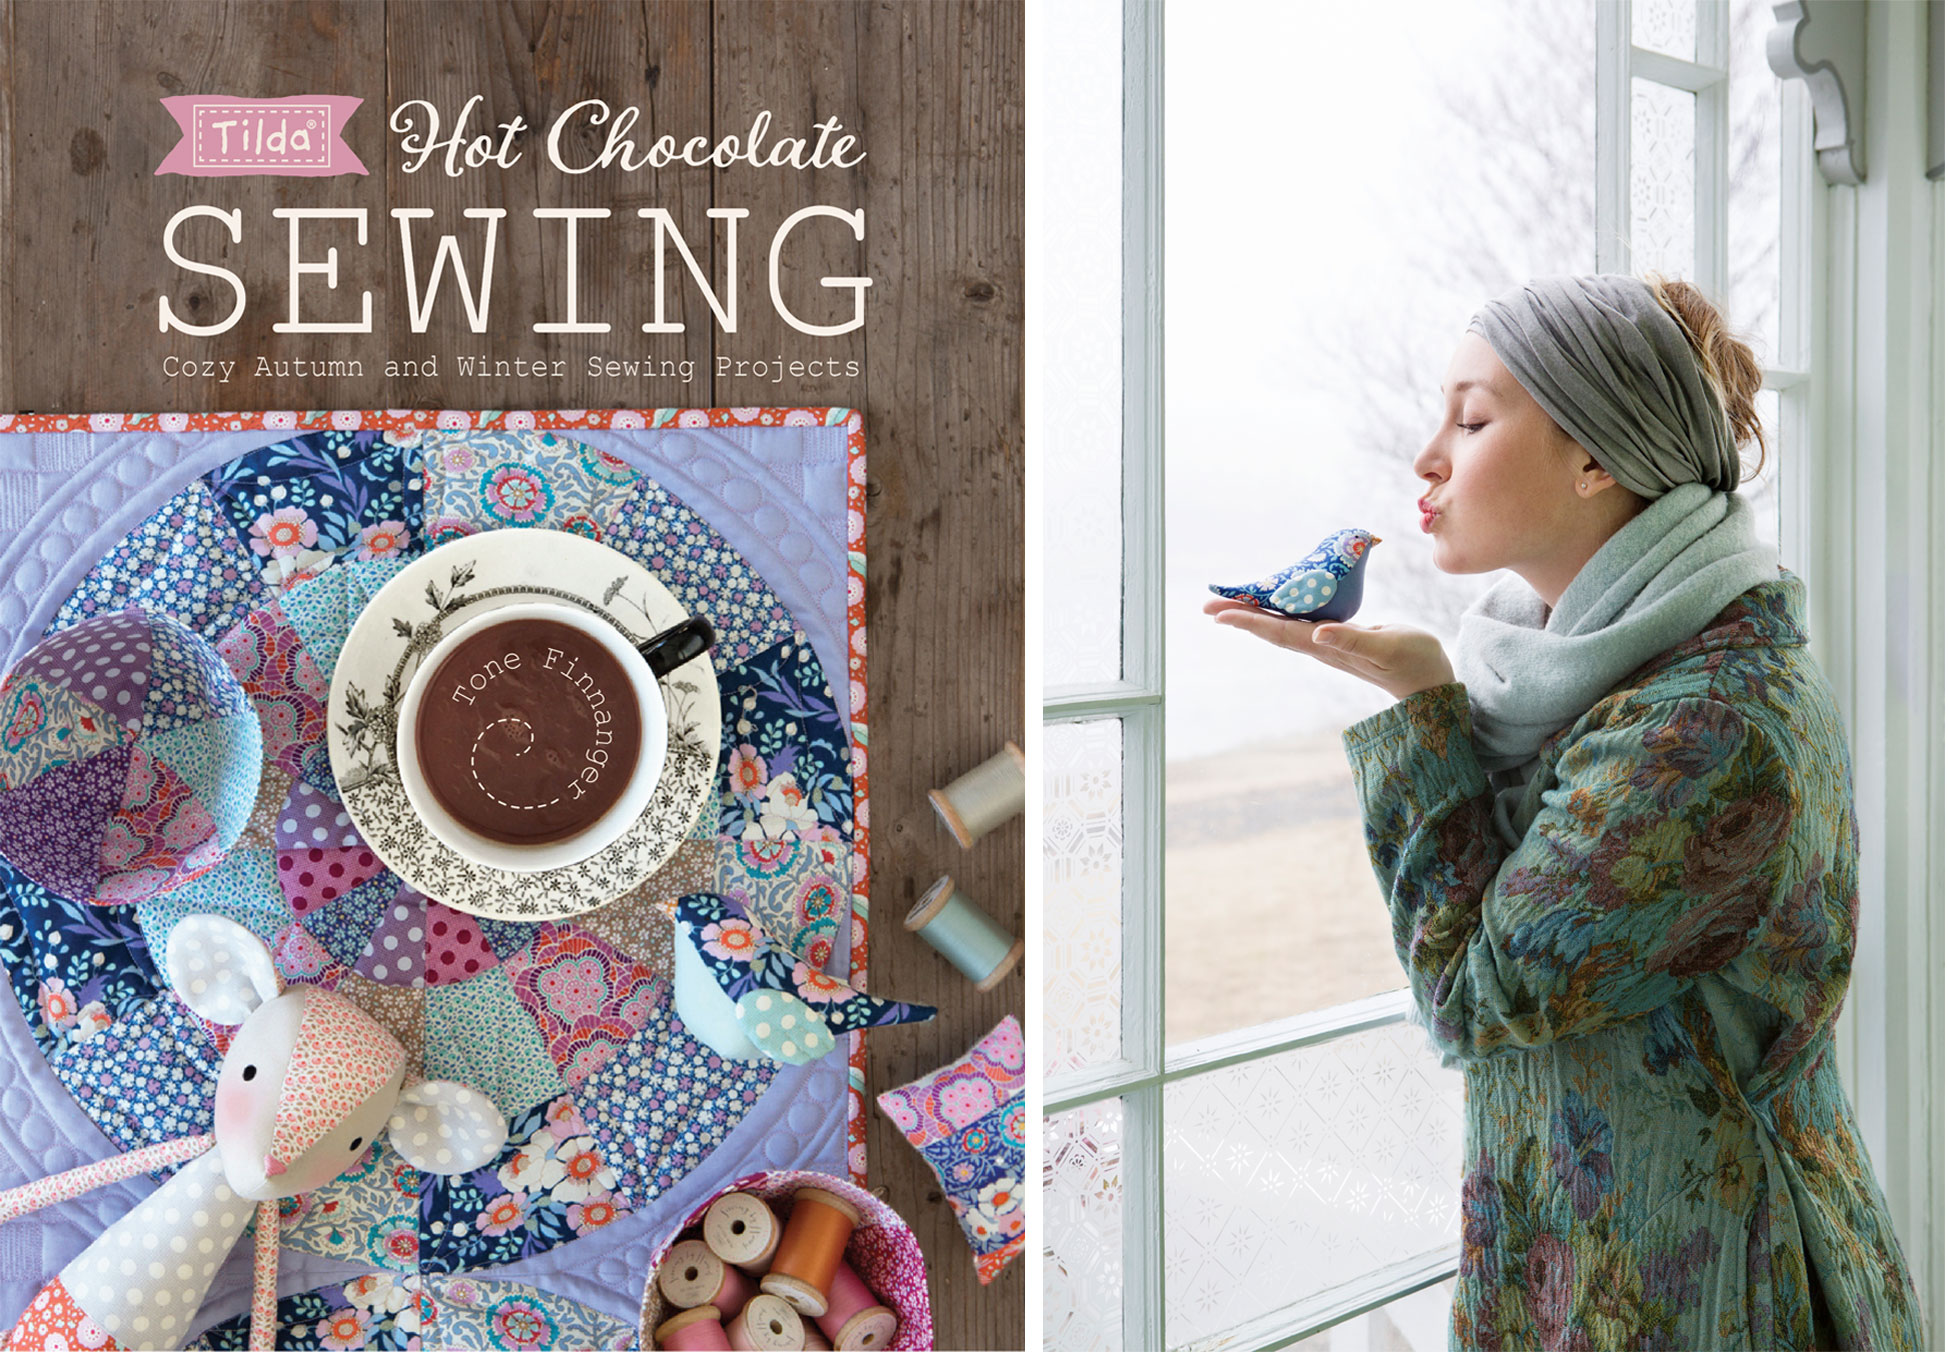 Book flip: Tilda Hot Chocolate Sewing 